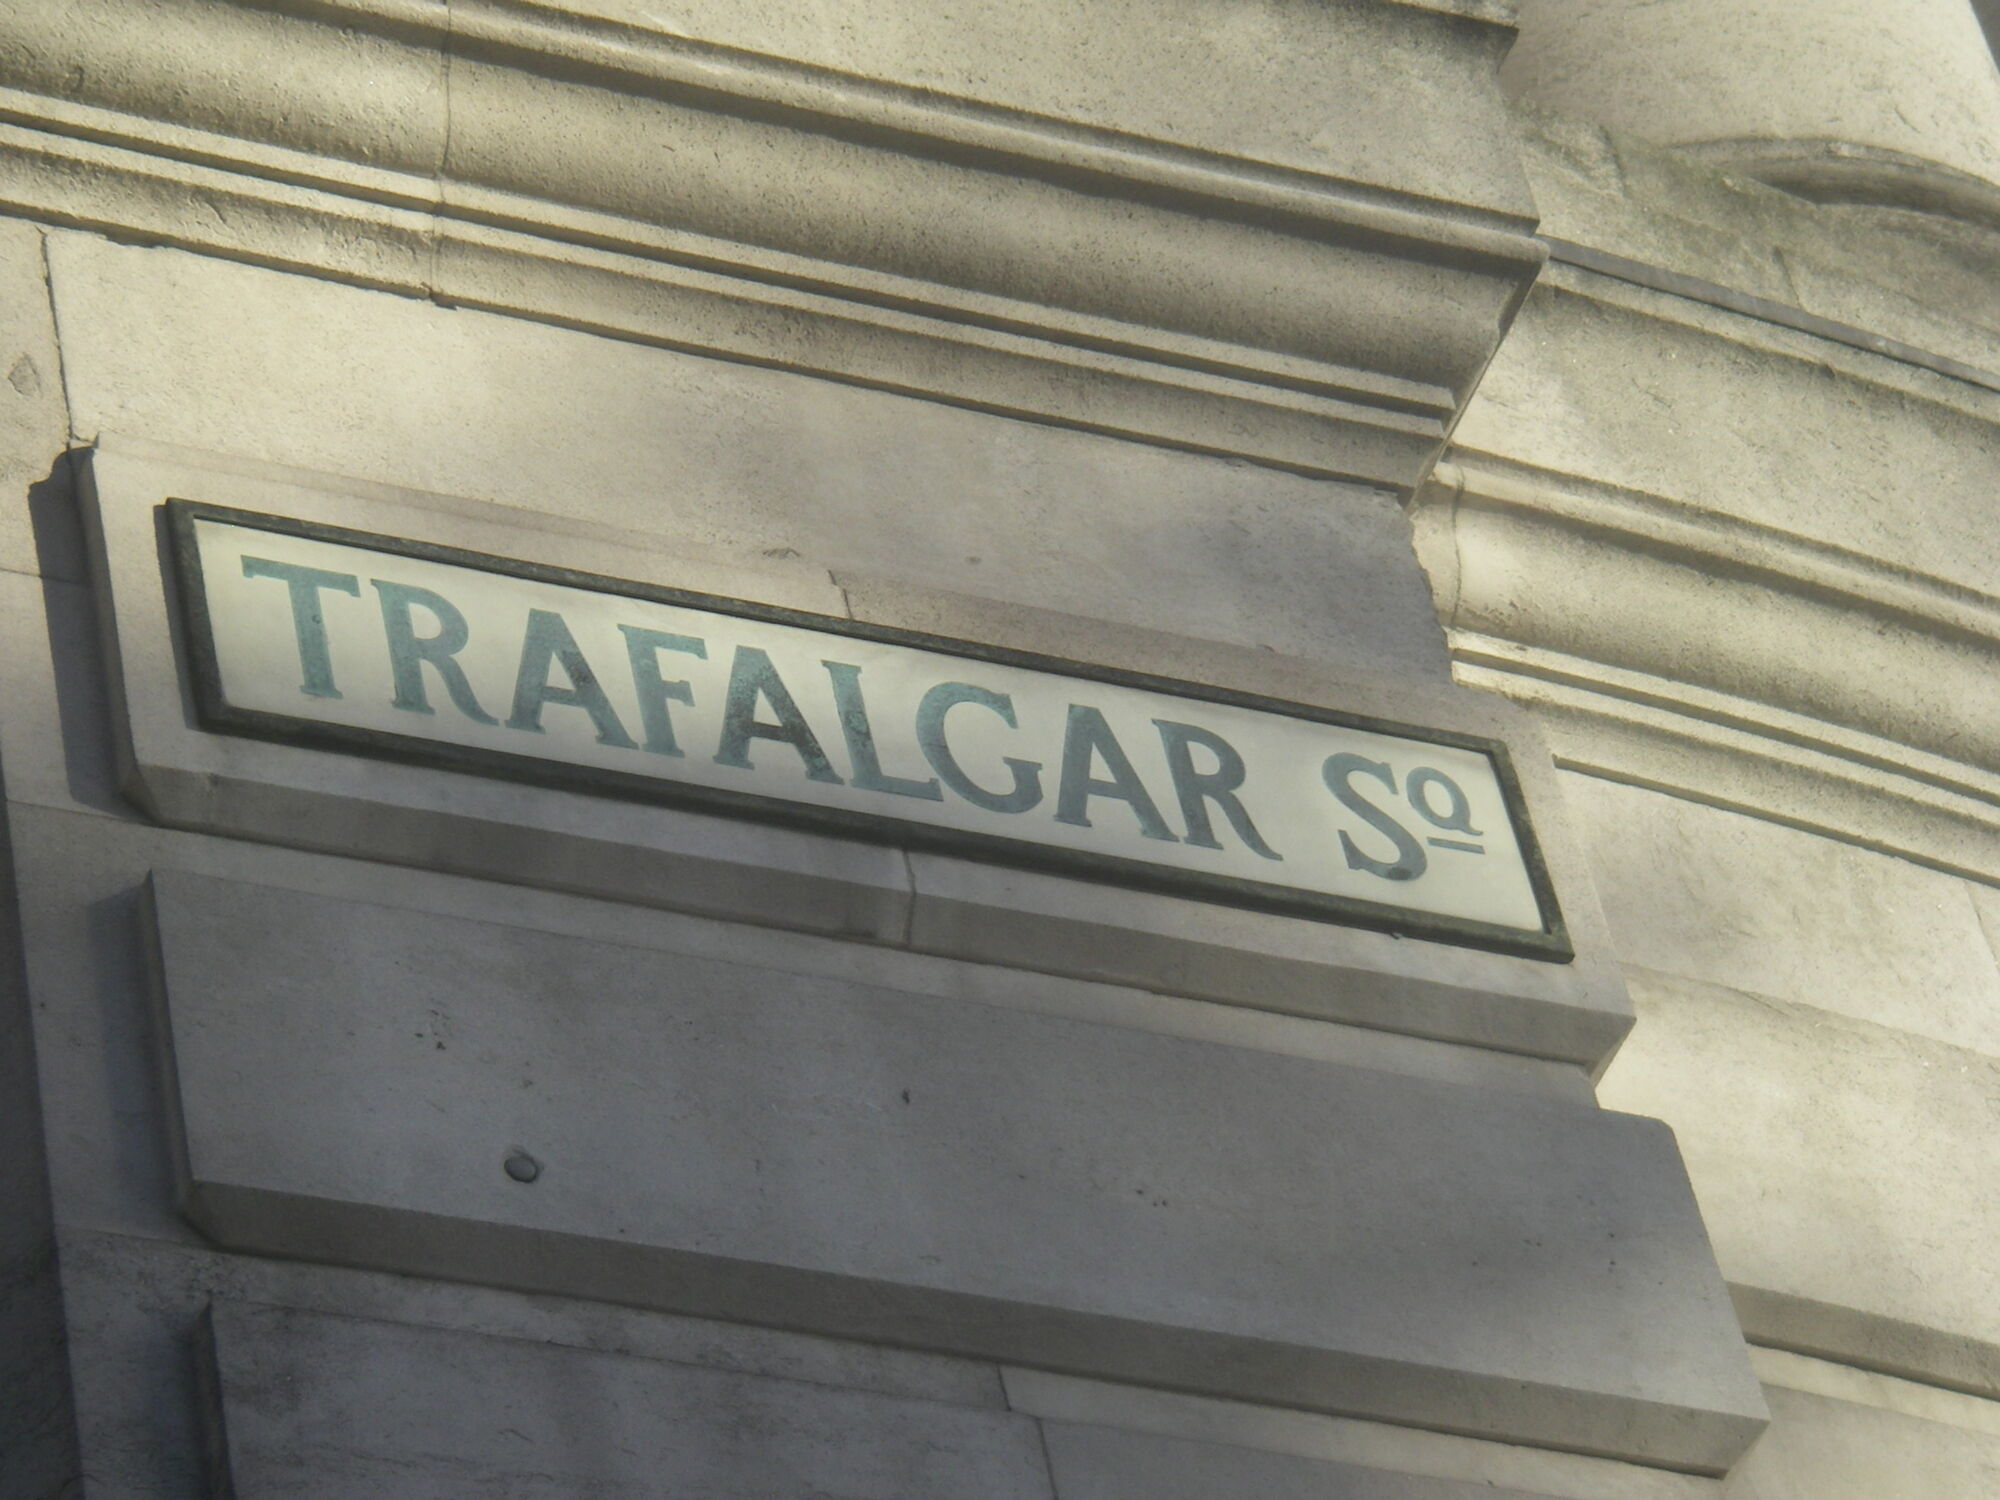 Download Trafalgar Square | Monopoly Wiki | Fandom